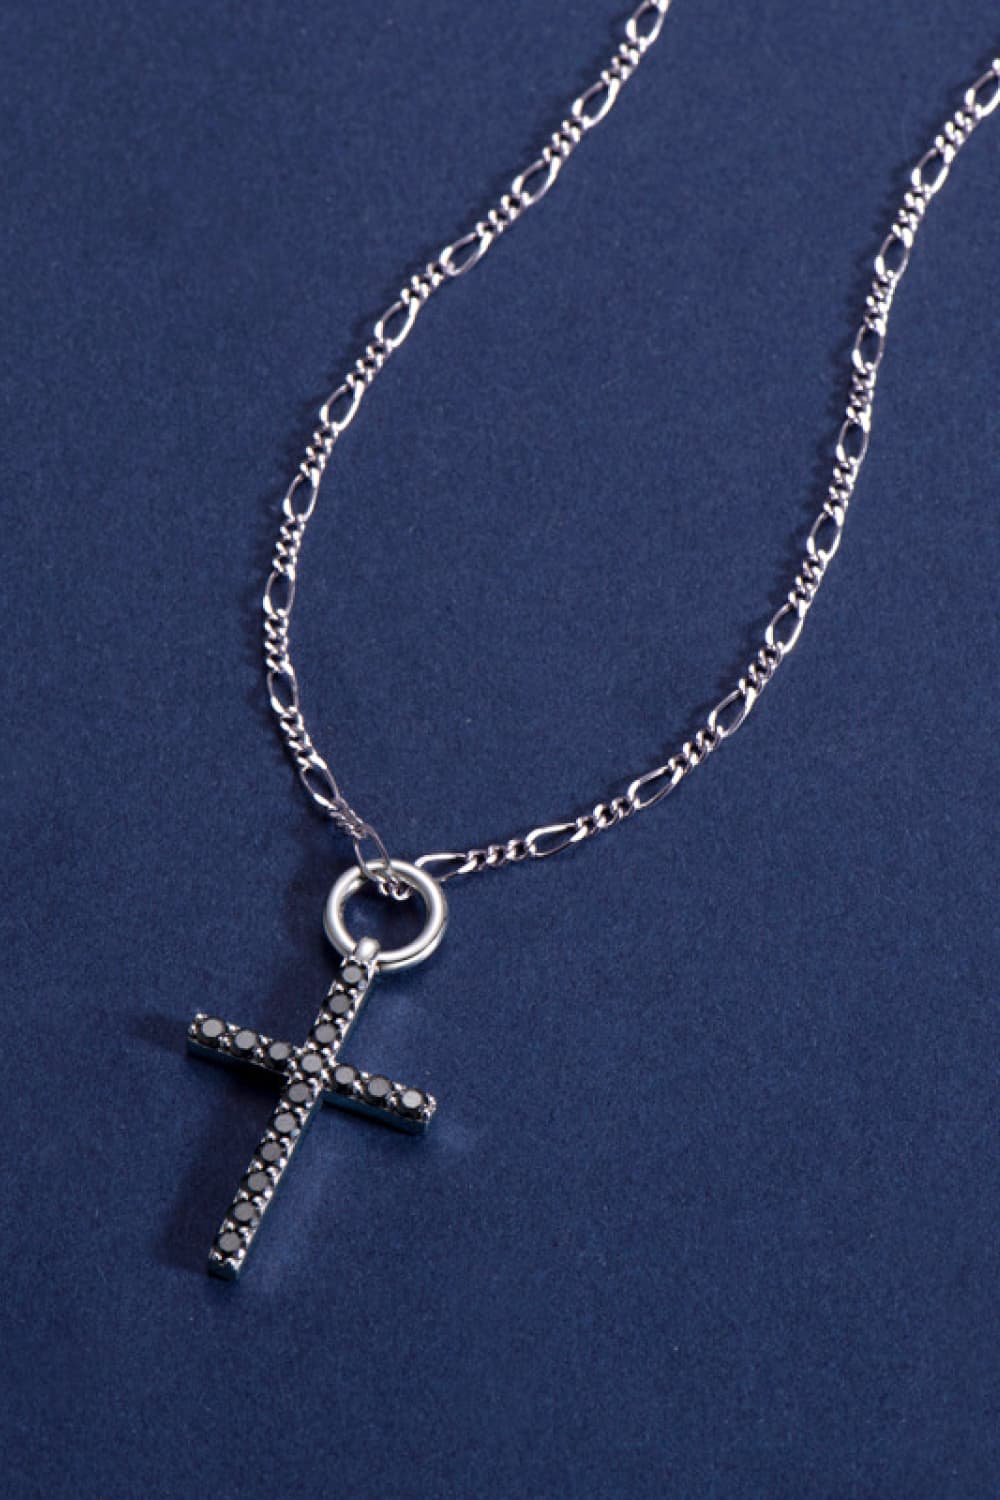 Moissanite Cross Pendant Platinum-Plated Necklace - Shop women apparel, Jewelry, bath & beauty products online - Arwen's Boutique